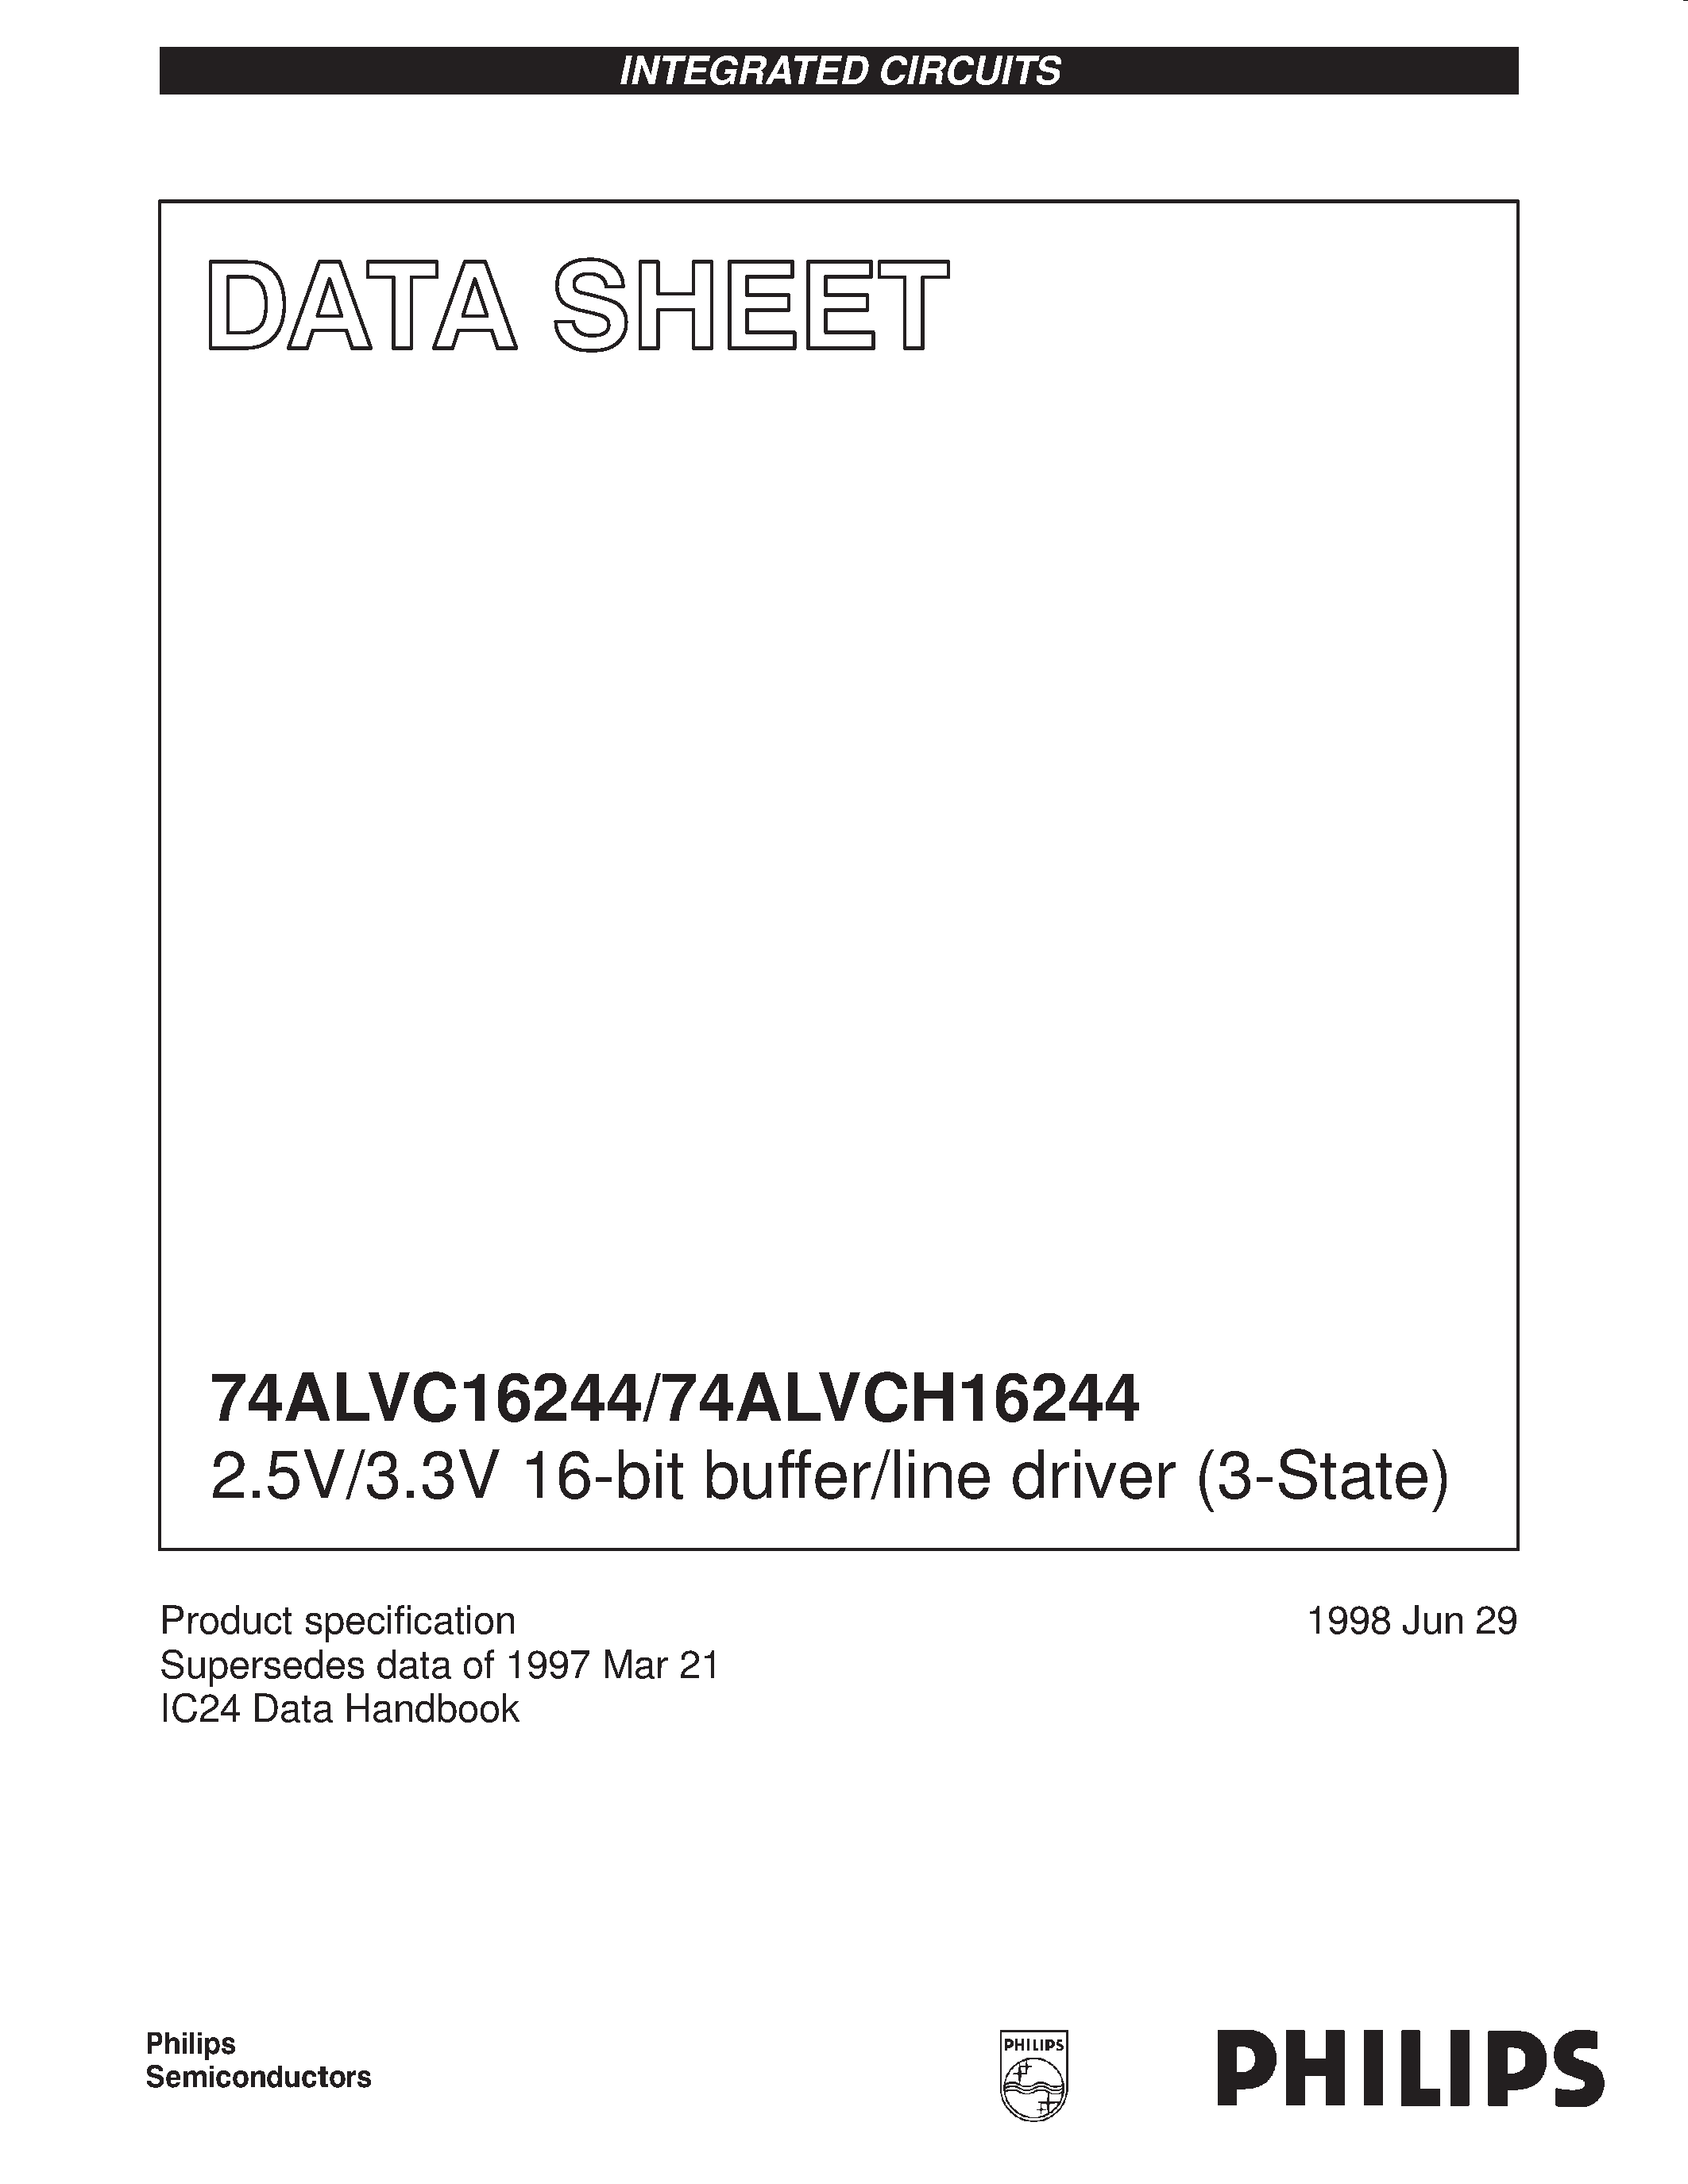 Datasheet 74ALVCH16244 - 2.5V/3.3V 16-bit buffer/line driver 3-State page 1